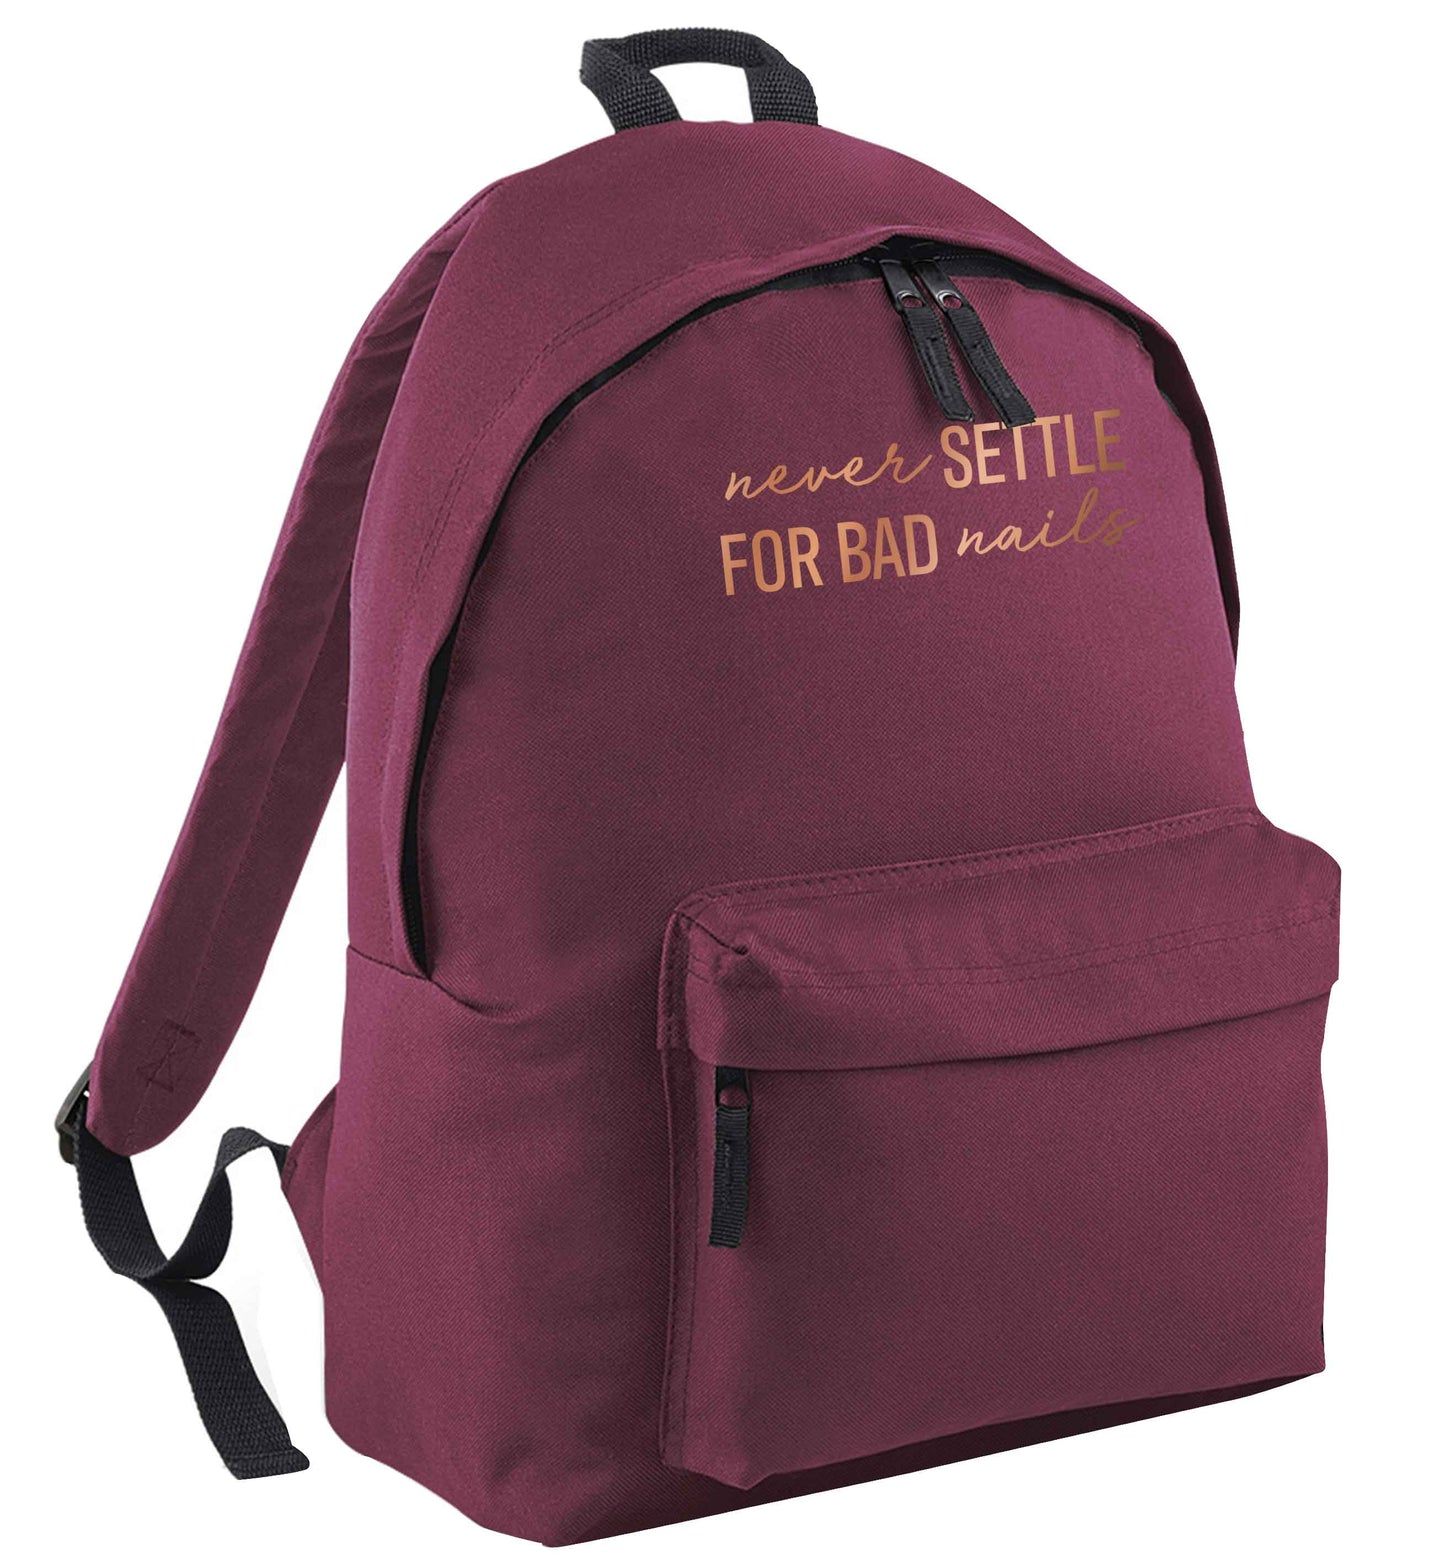 Never settle for bad nails - rose gold | Children's backpack